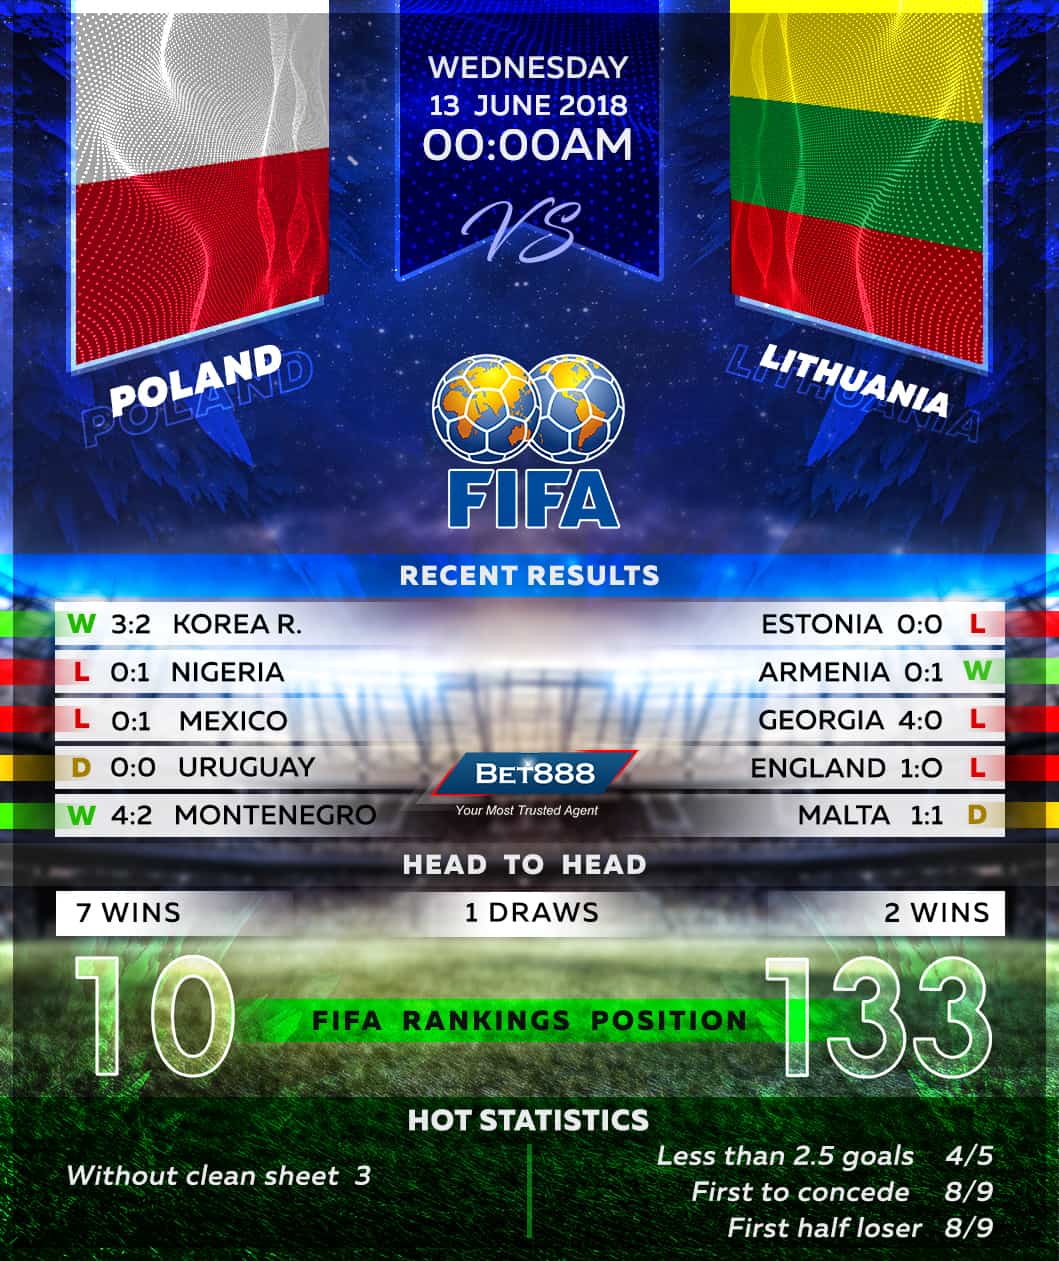 Poland vs Lithuania 13/06/18